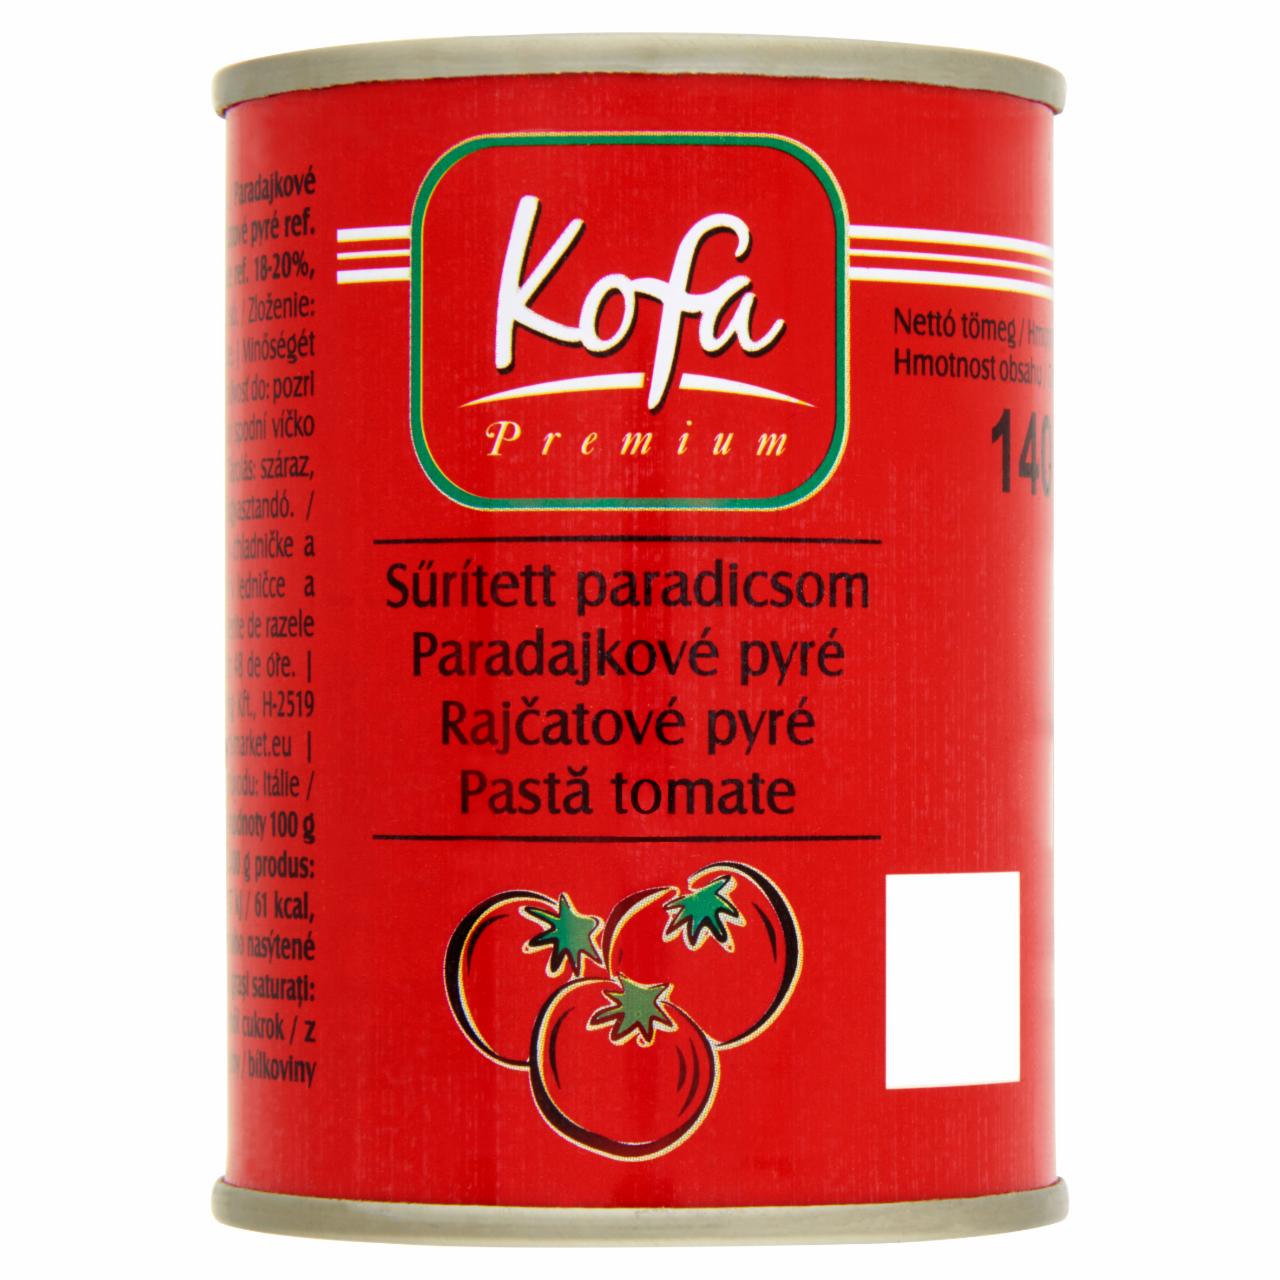 Képek - Kofa Premium sűrített paradicsom 140 g